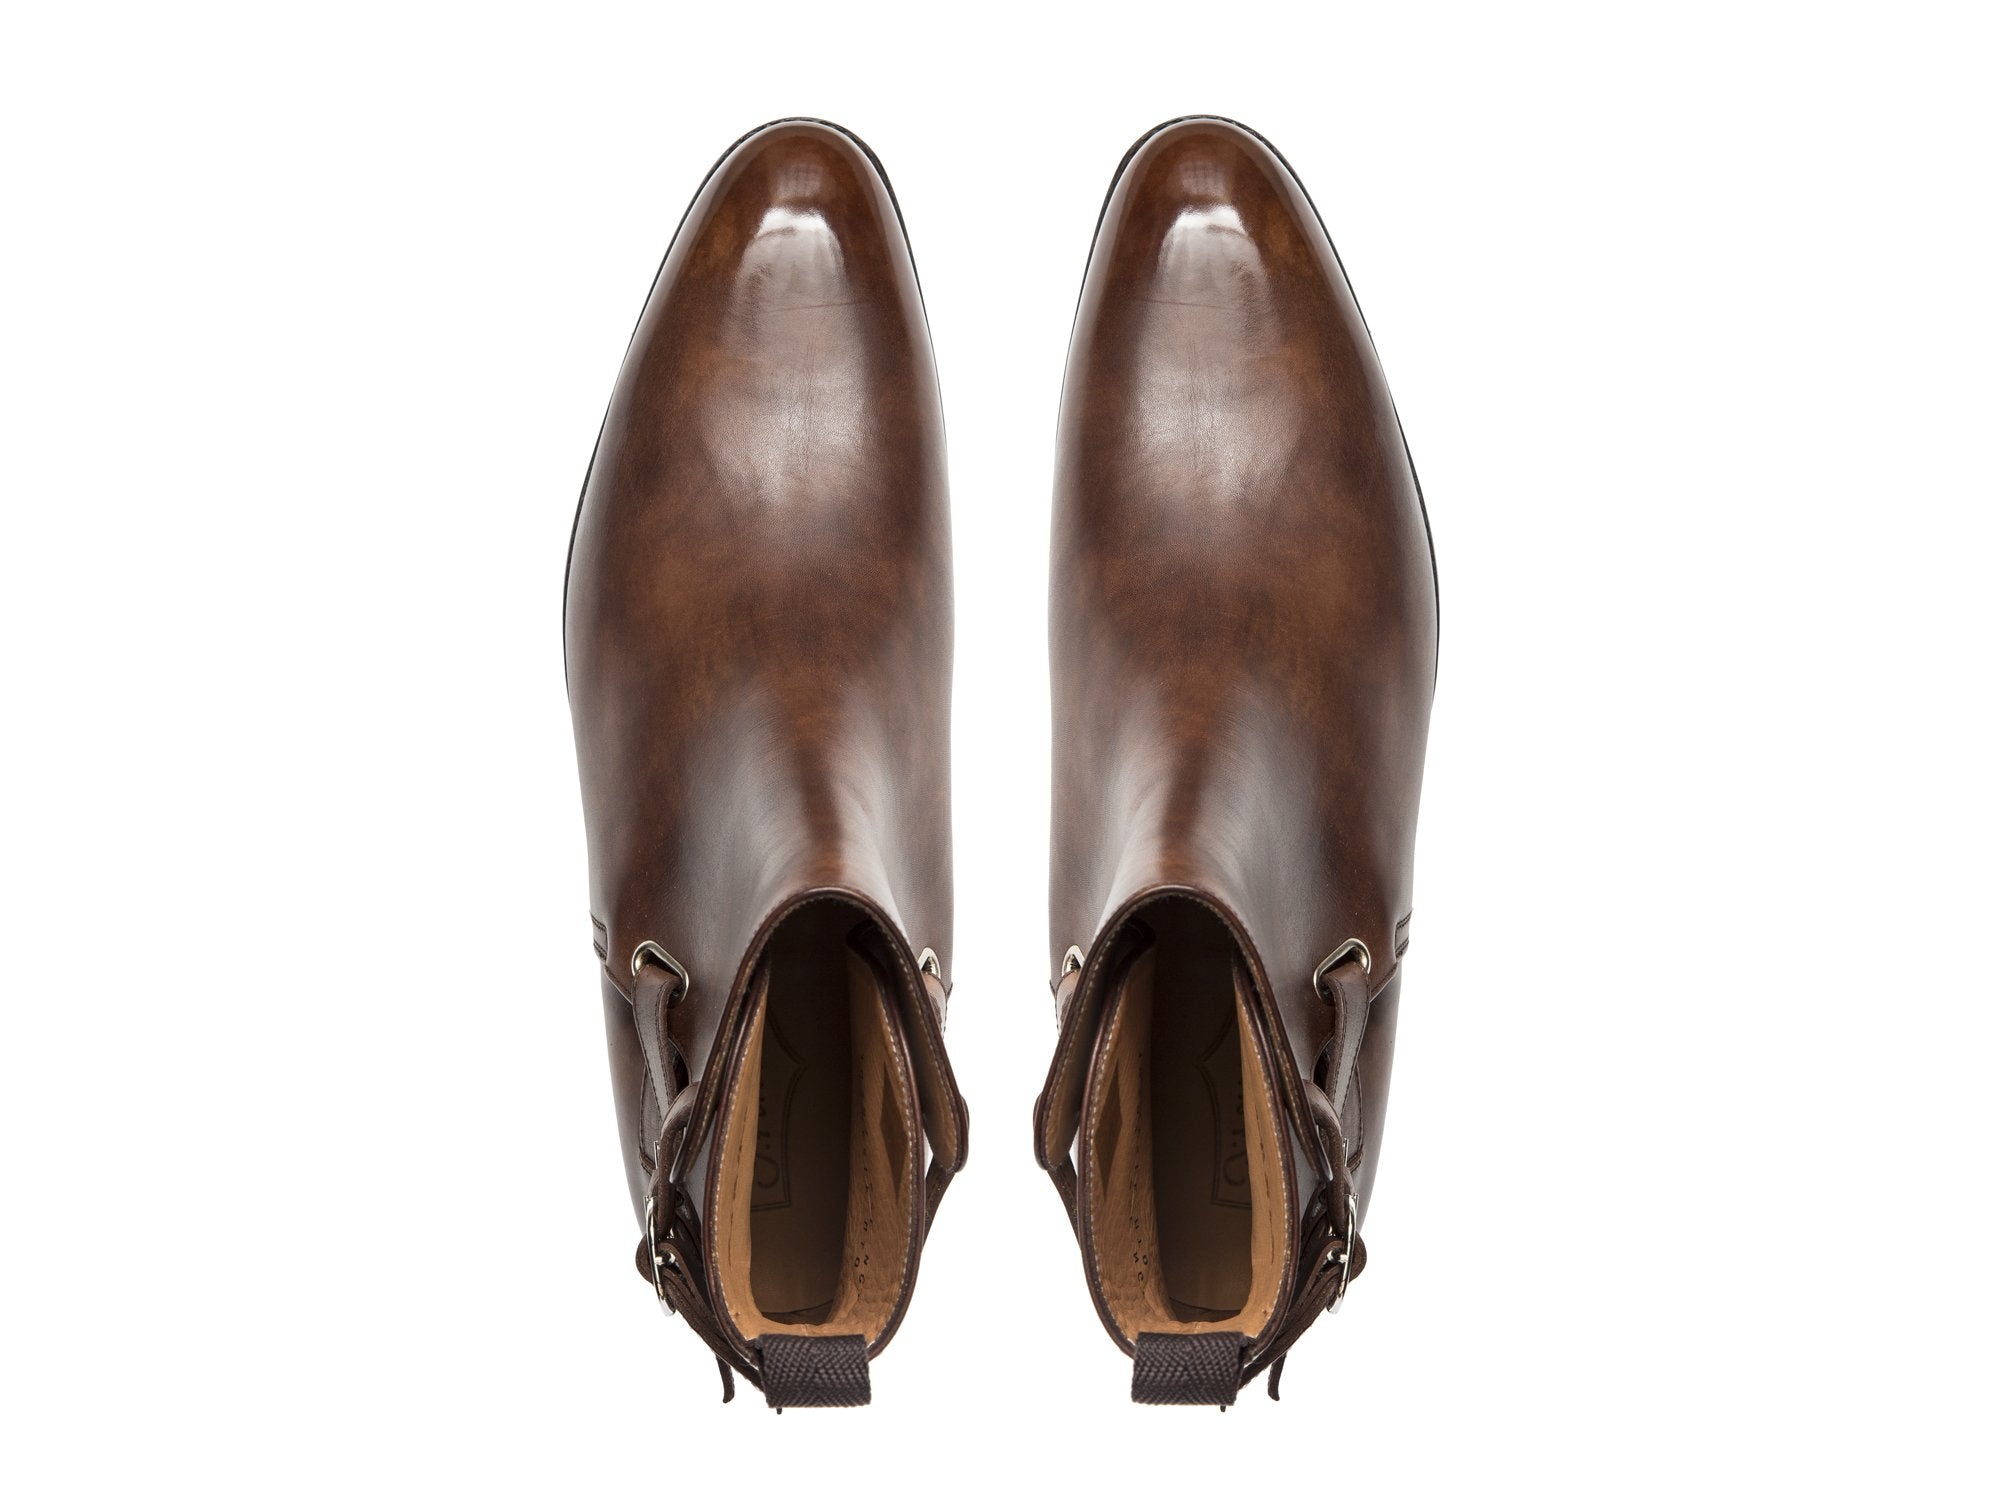 J.FitzPatrick Footwear - Genesee - Copper Museum Calf- TMG Last- Double Leather Sole